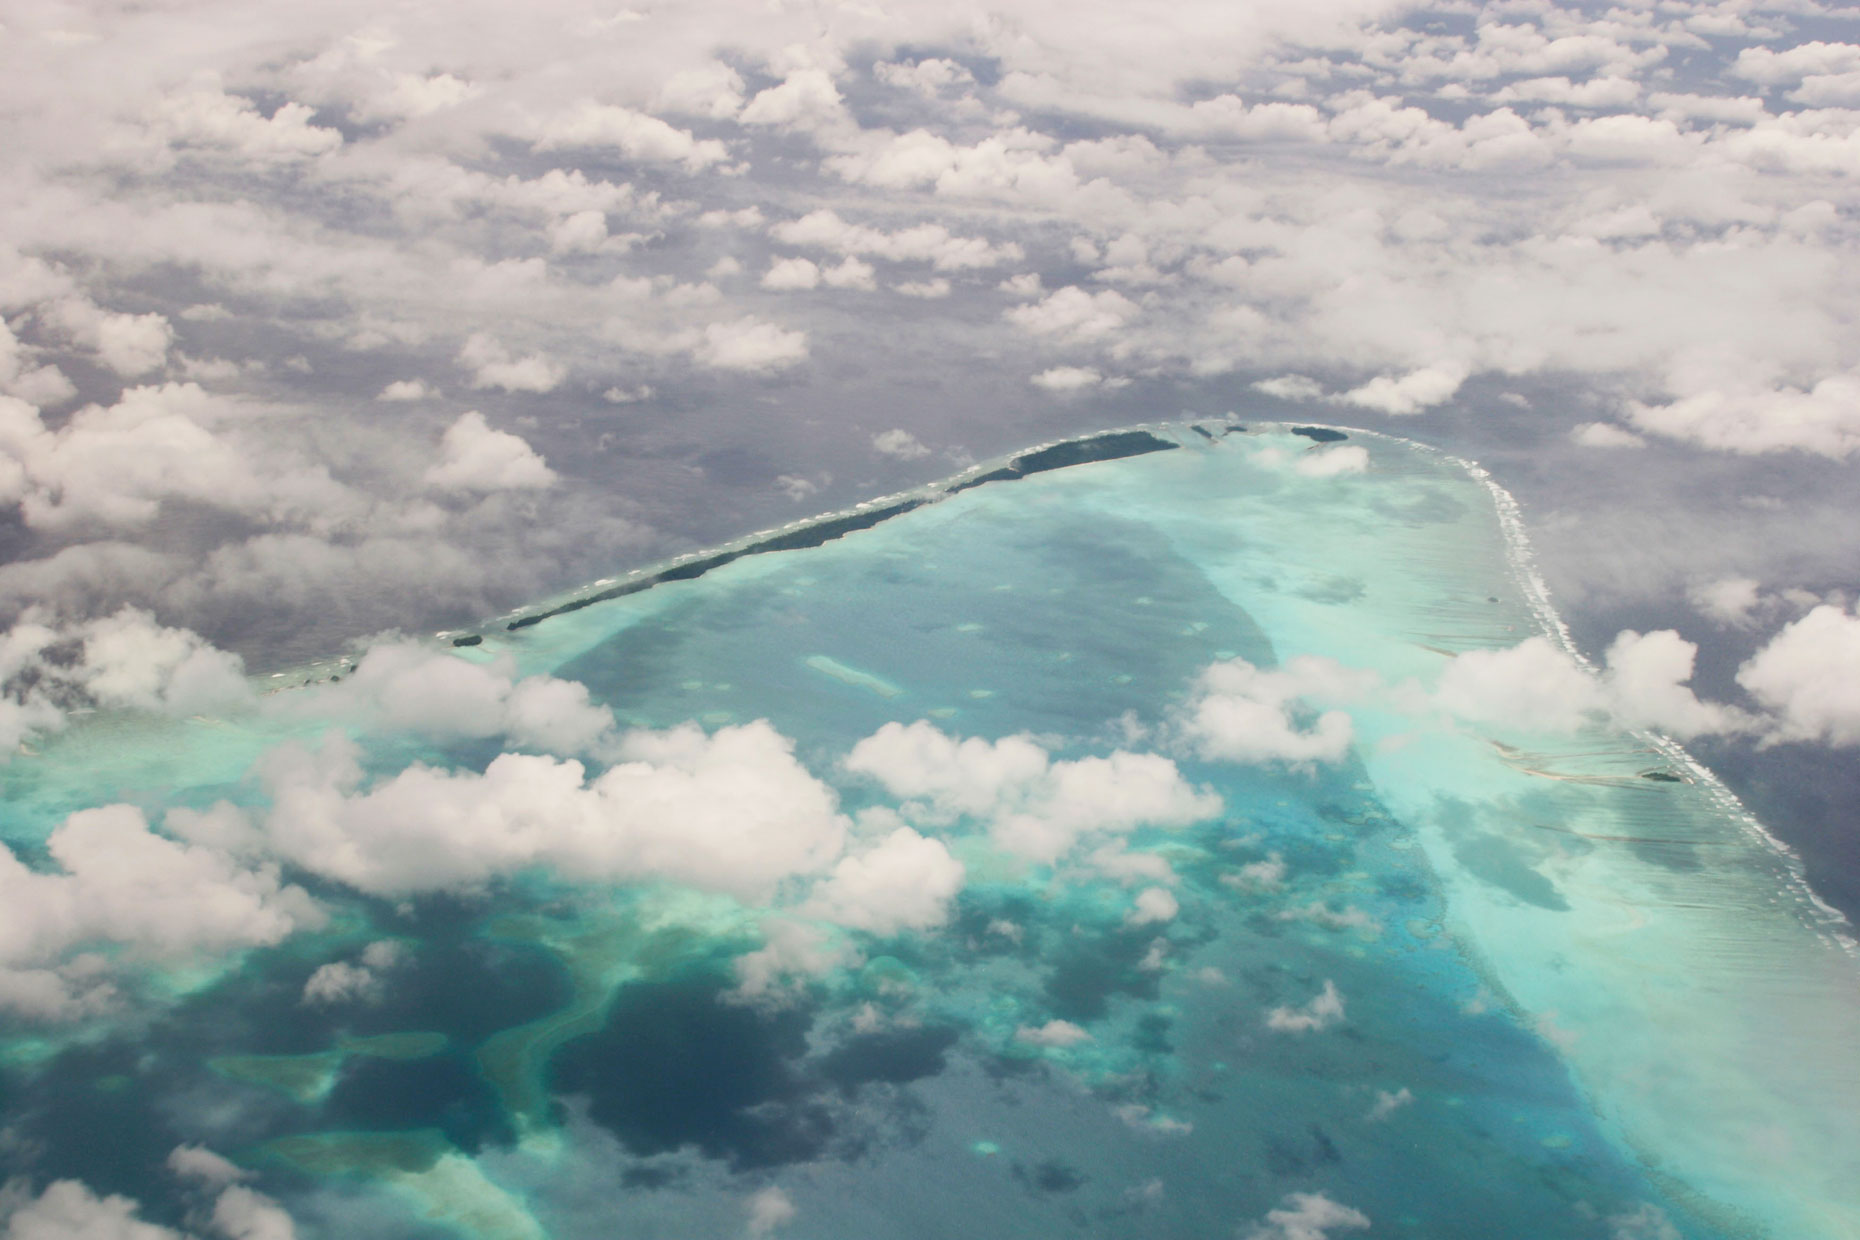 KIRIBATI atoll from above, by Scotland Greenpeace photographer